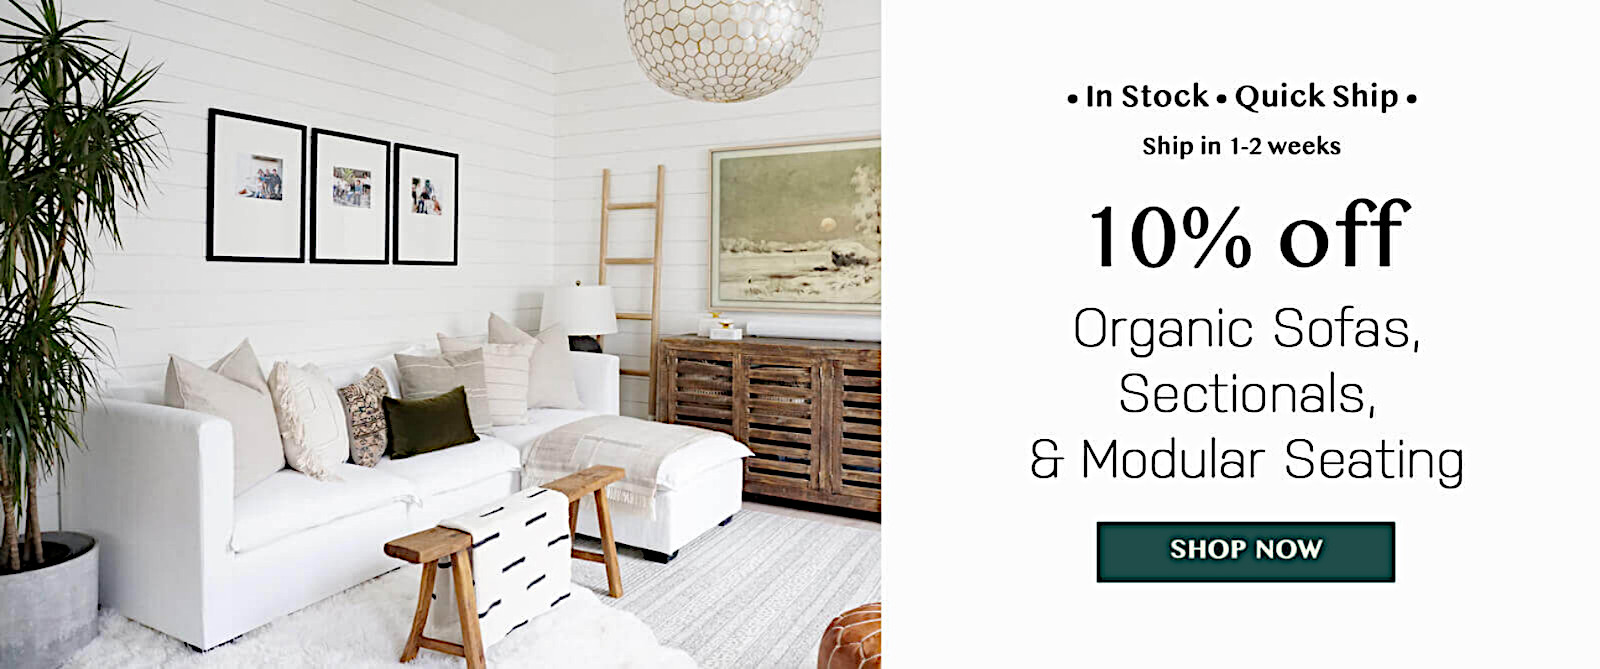 On Sale organic sofas sectionals modular seating